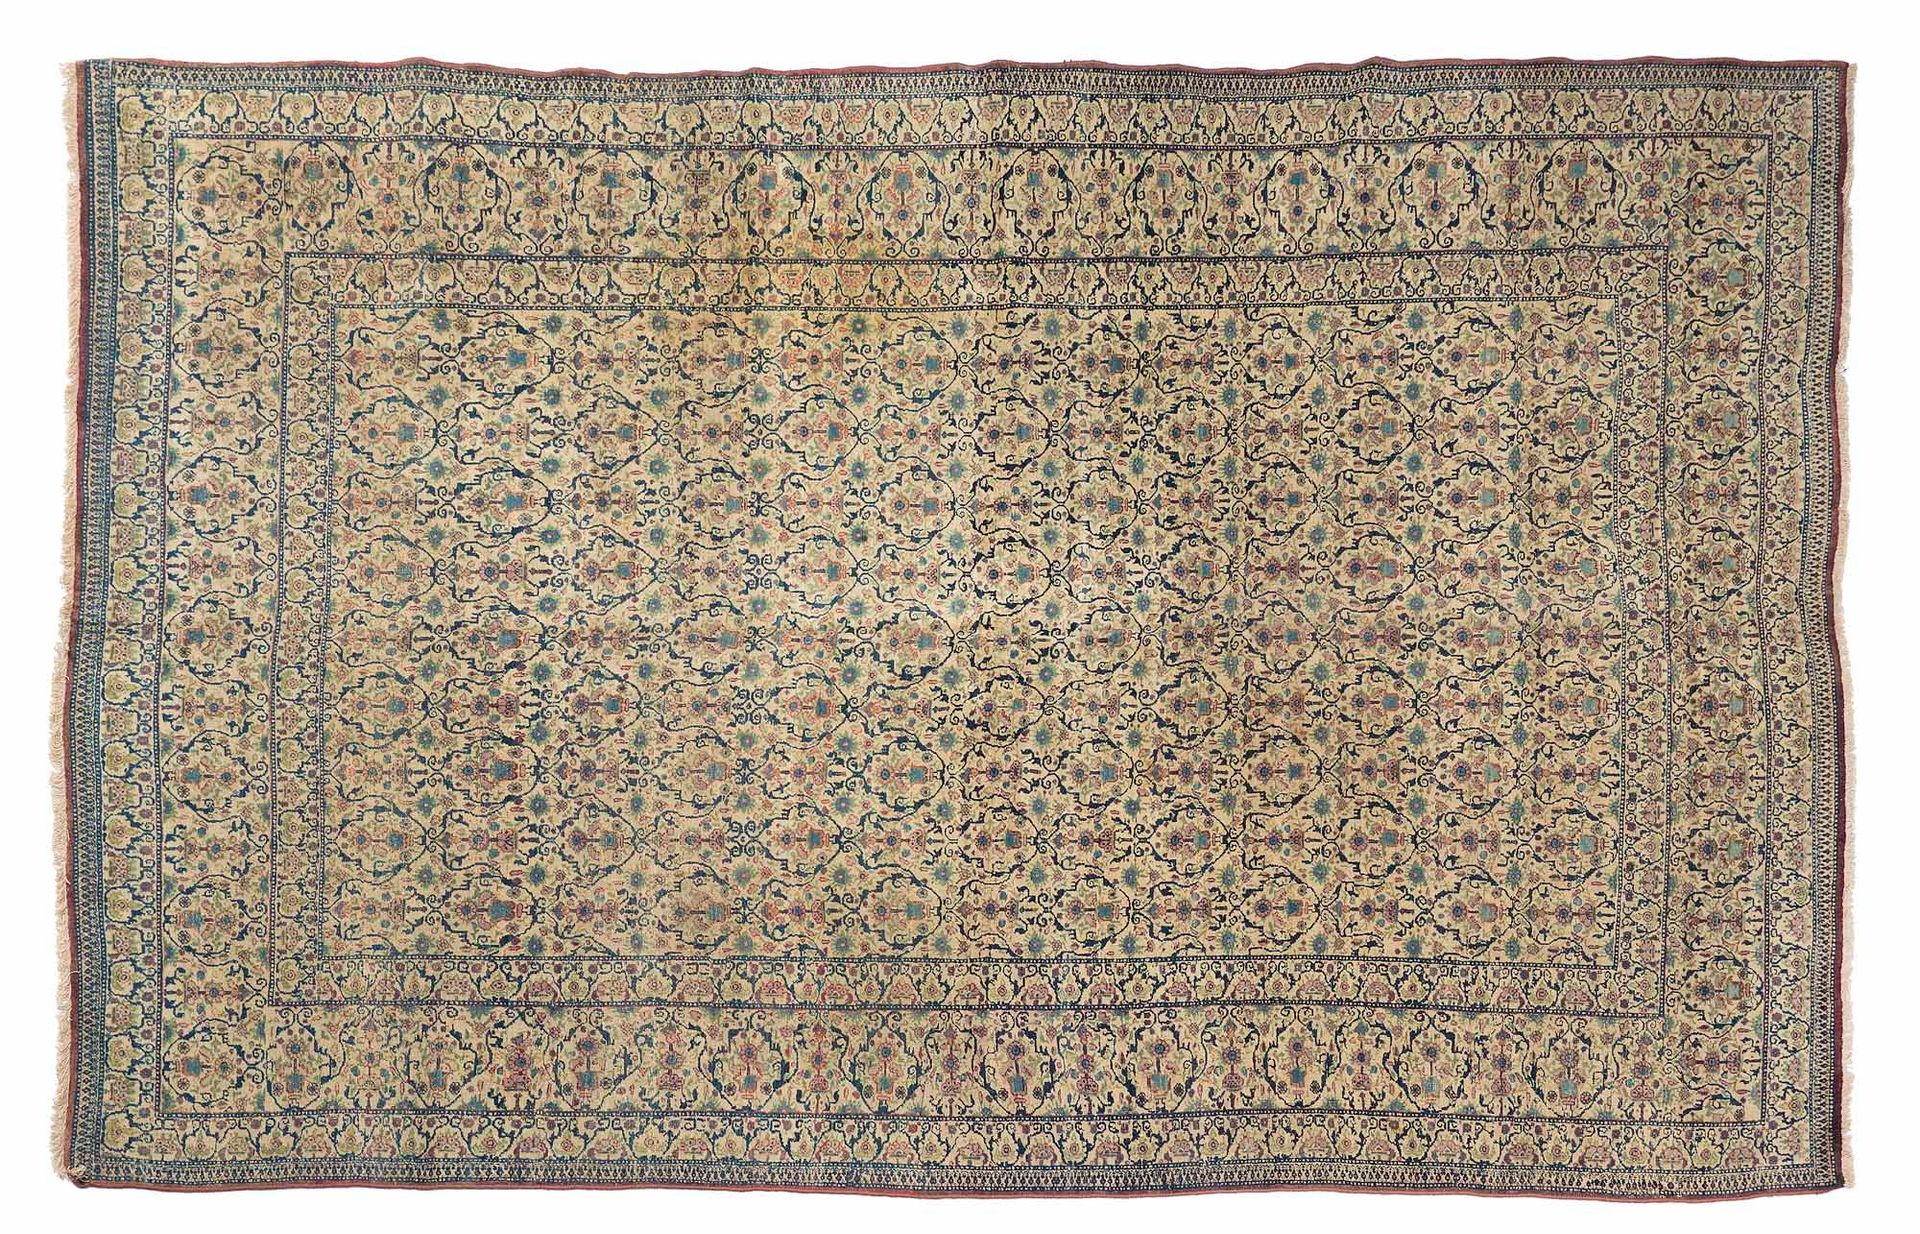 Null Teheran carpet (Persia), end of the 19th century

Dimensions : 309 x 207cm.&hellip;